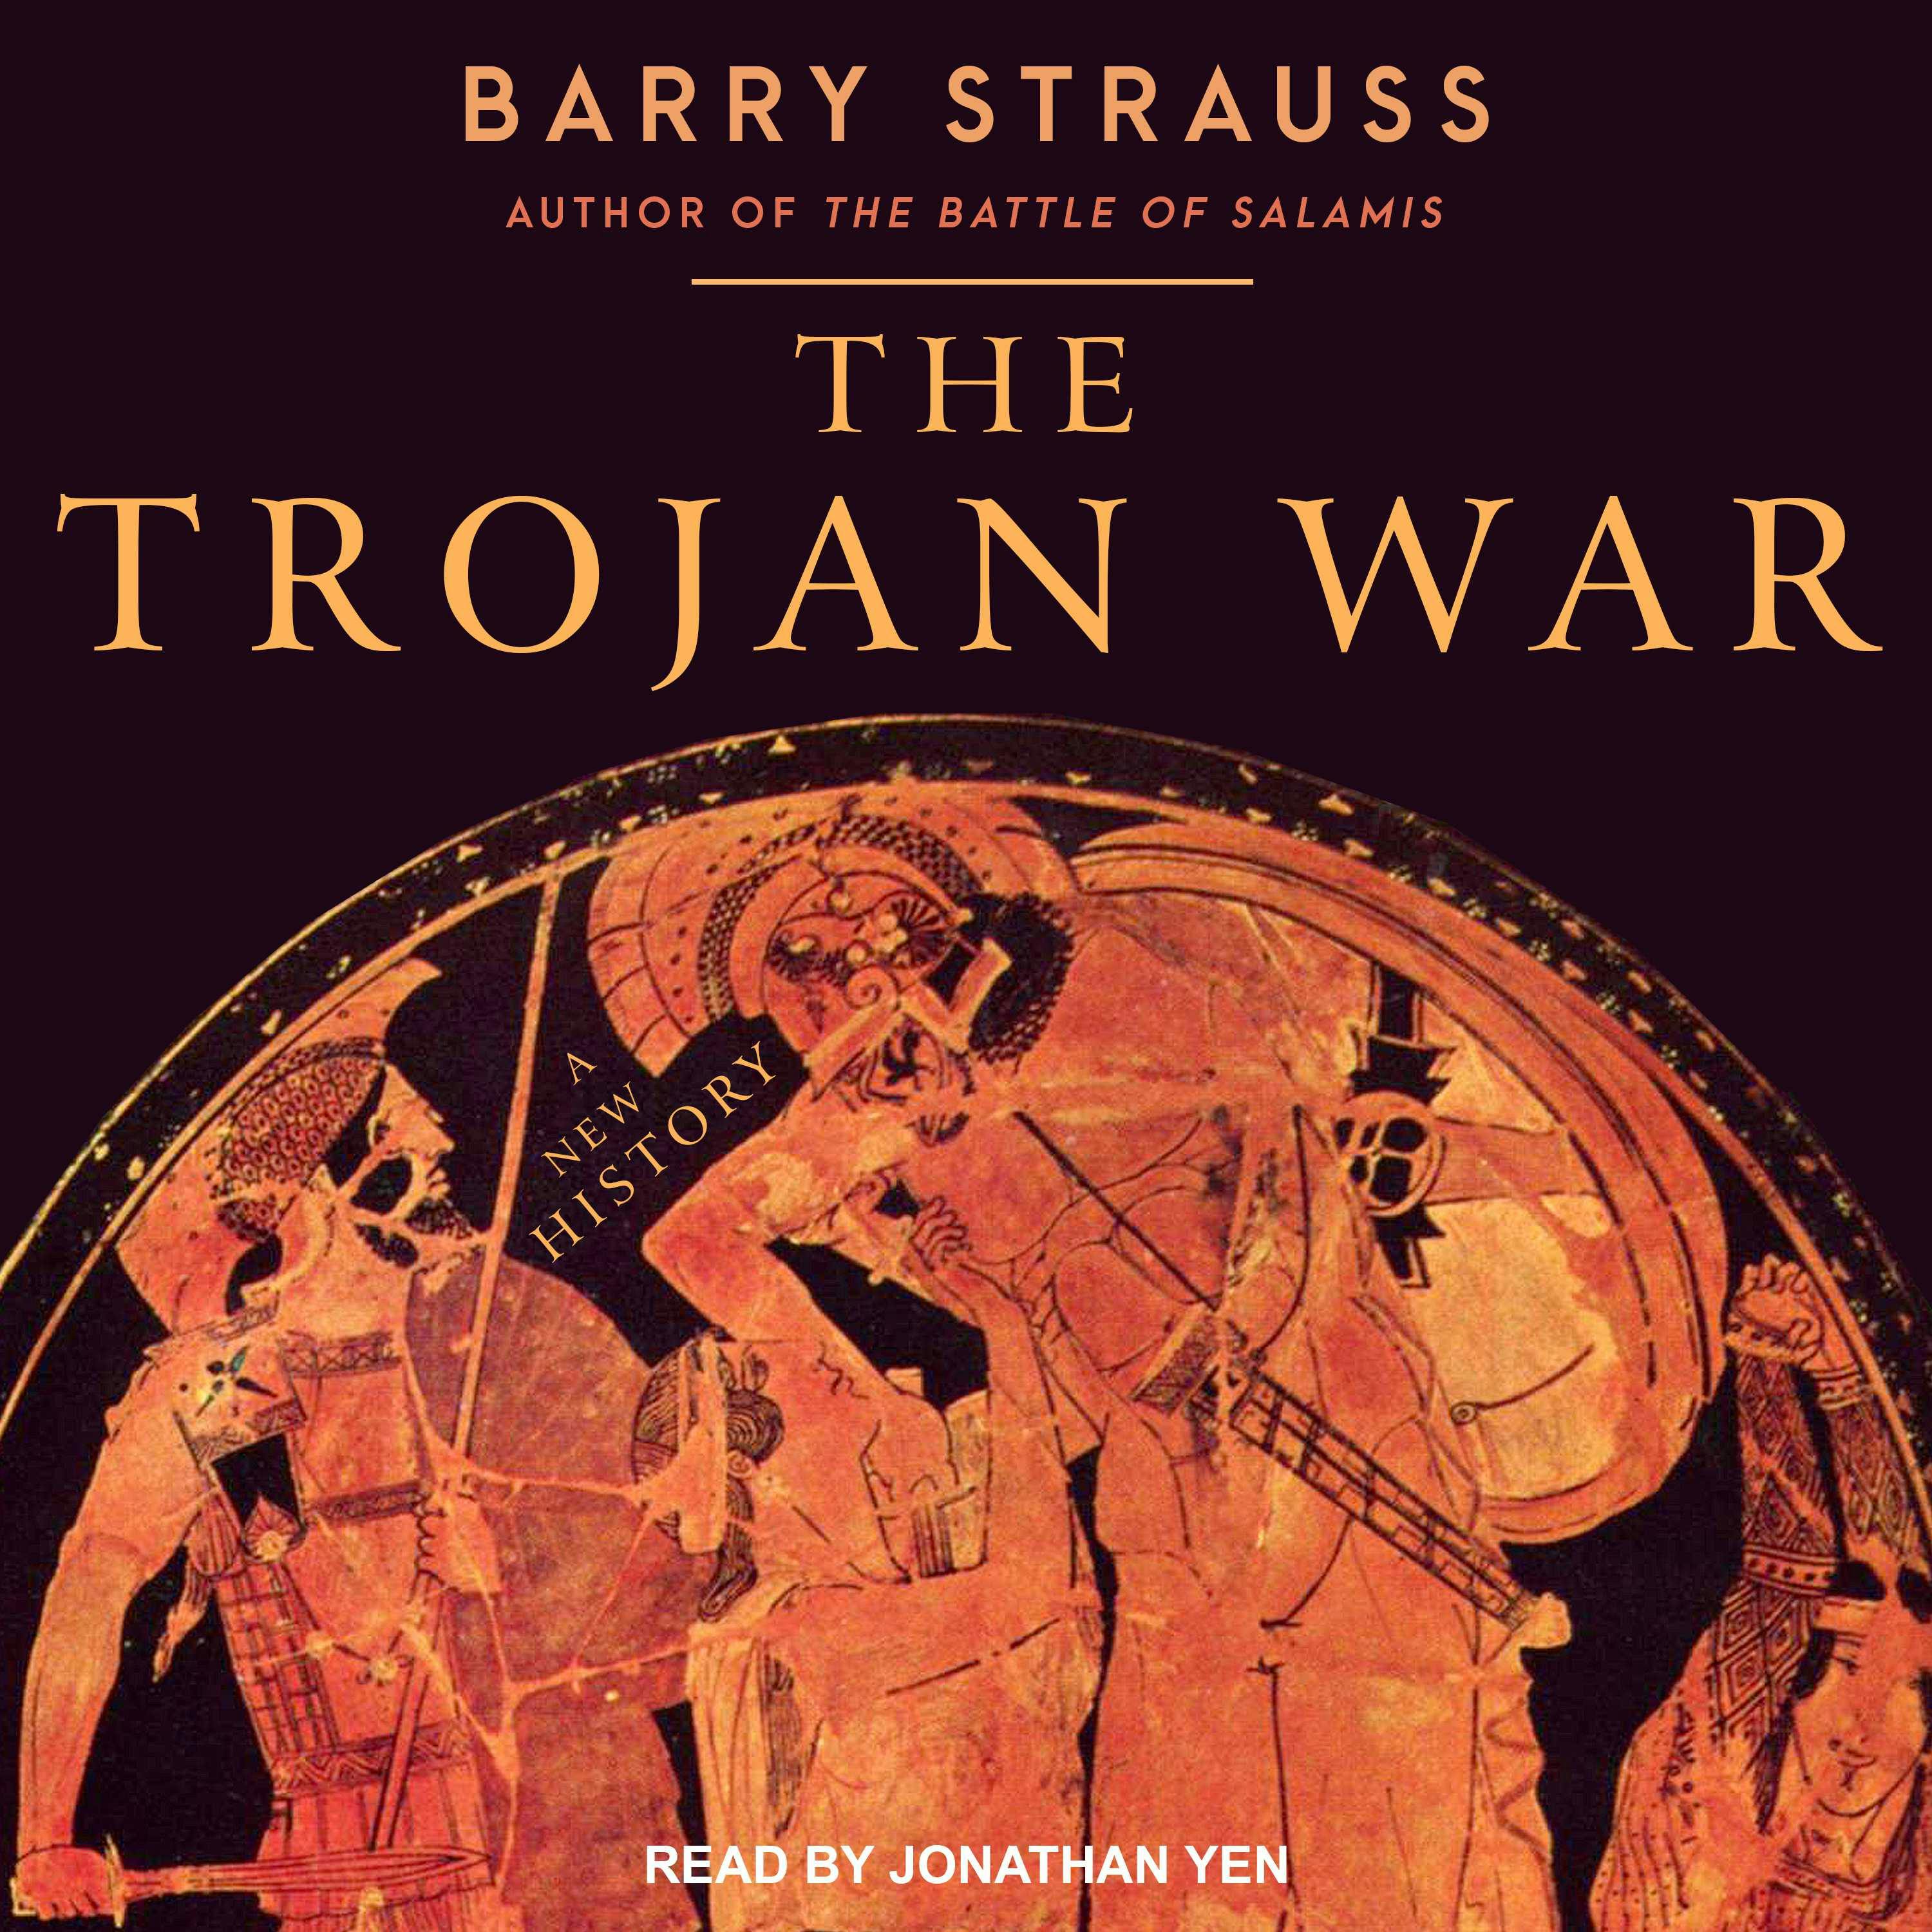 The Trojan War: A New History - Barry Strauss